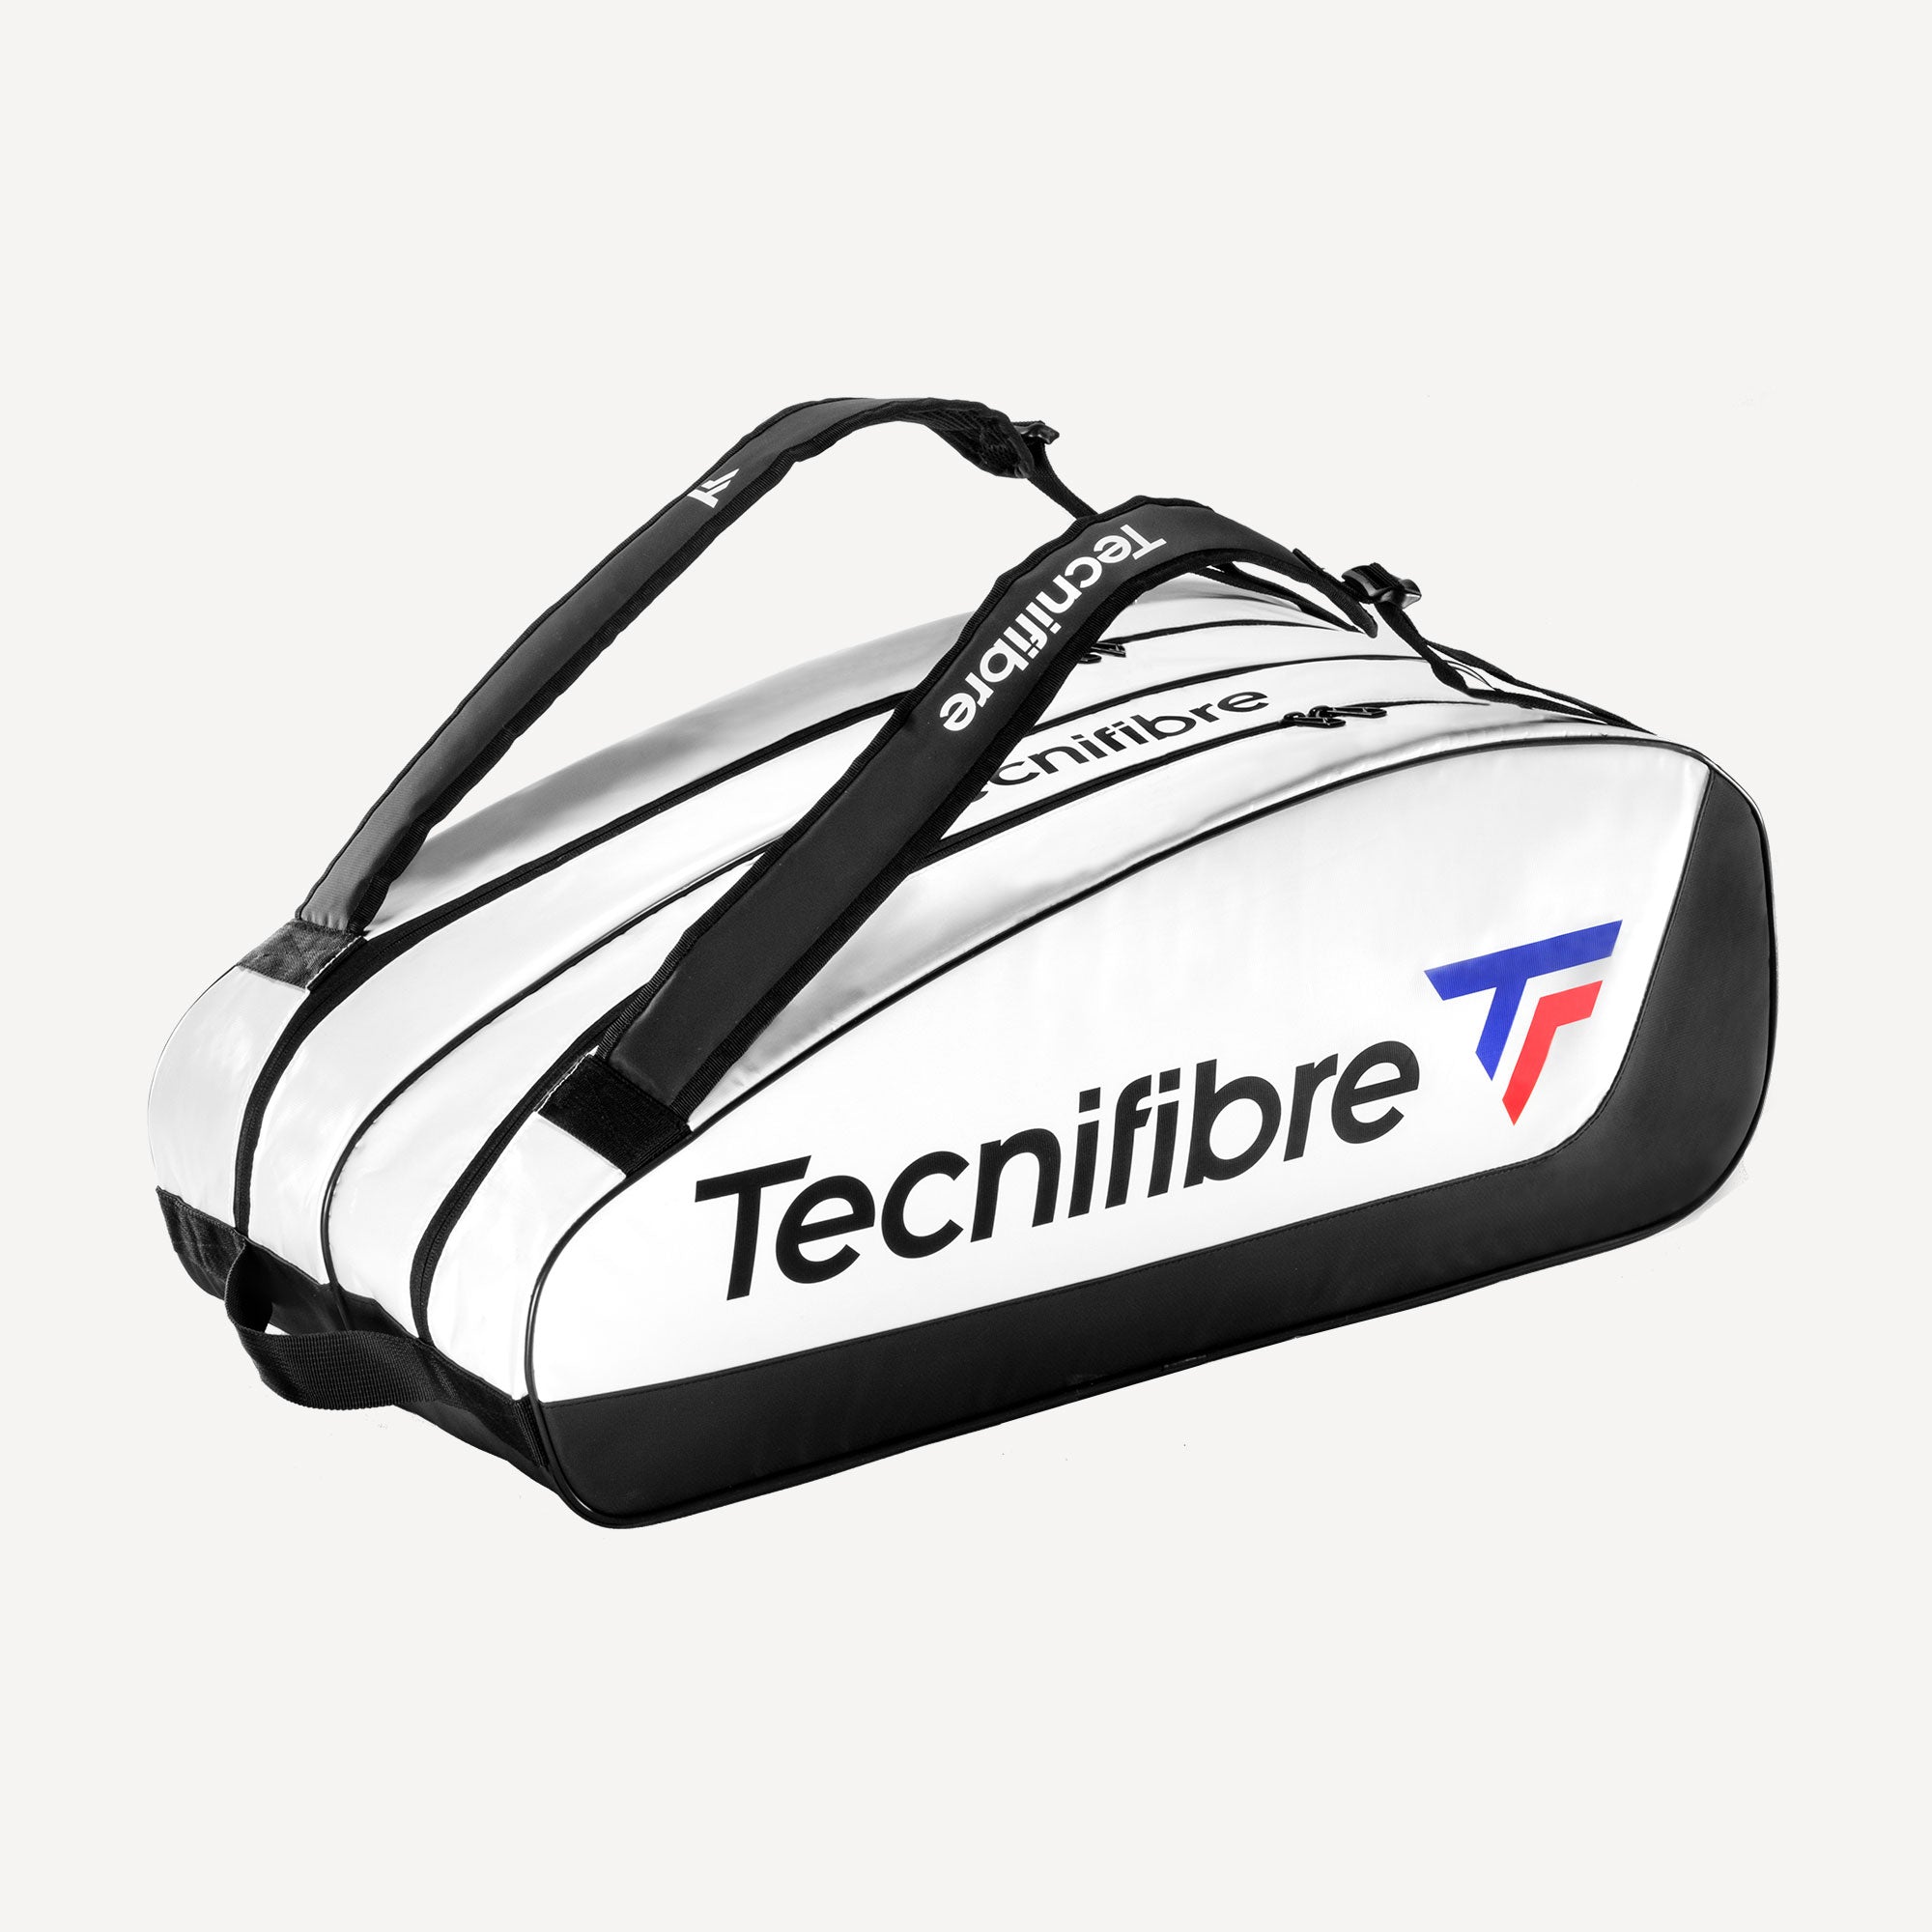 Tecnifibre Tour Endurance White 12 Racket Tennis Bag (1)Tecnifibre Tour Endurance White 12 Racket Tennis Bag (1)